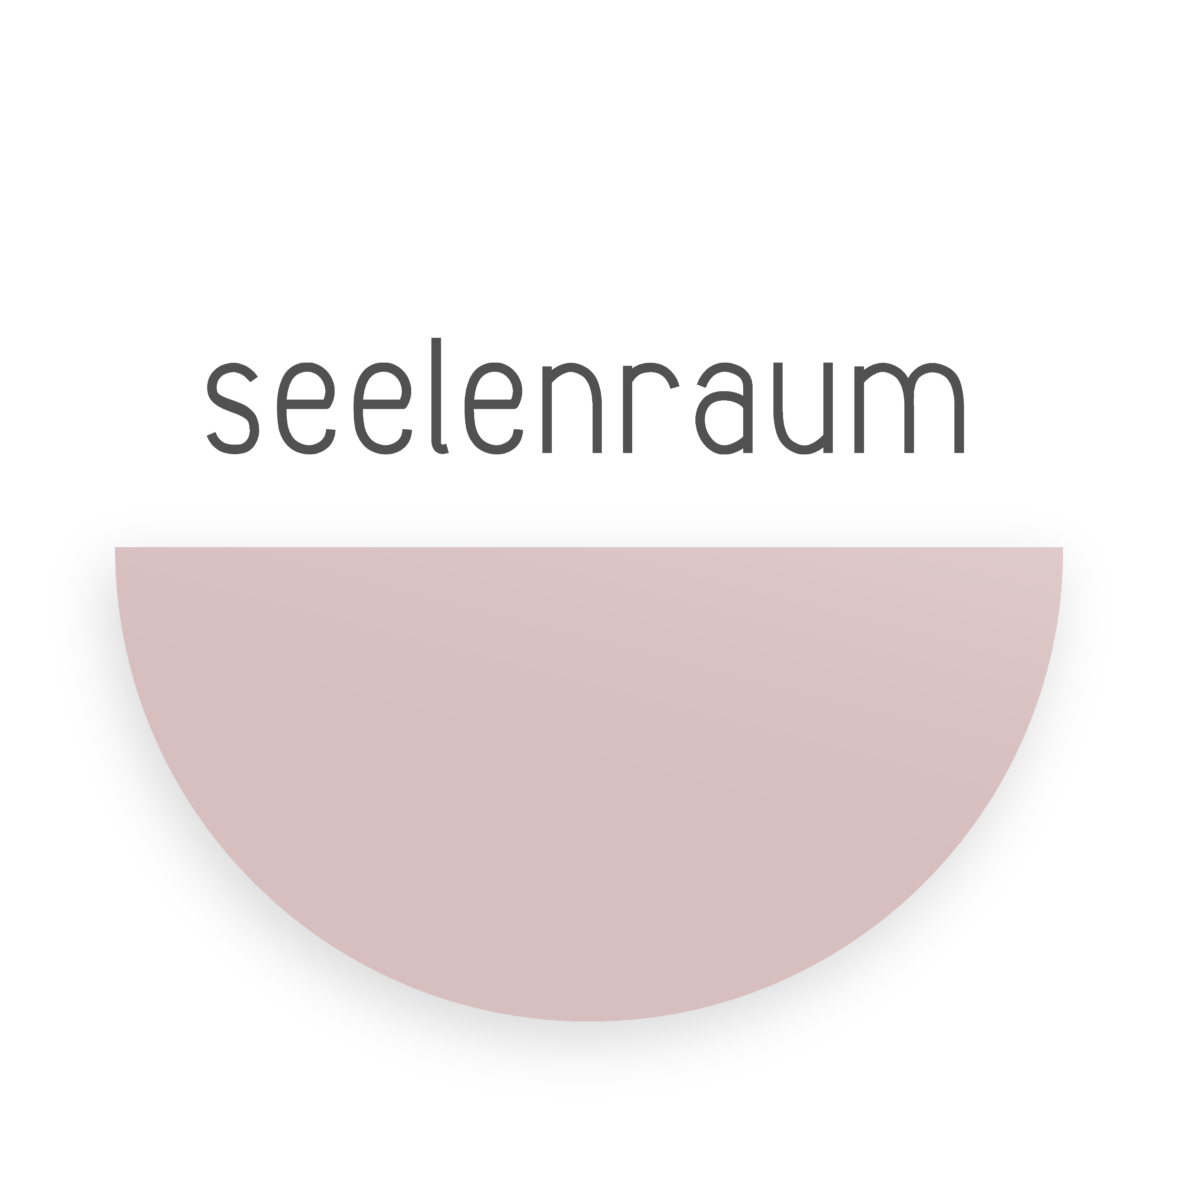 seelenraum logo nur seelenraum